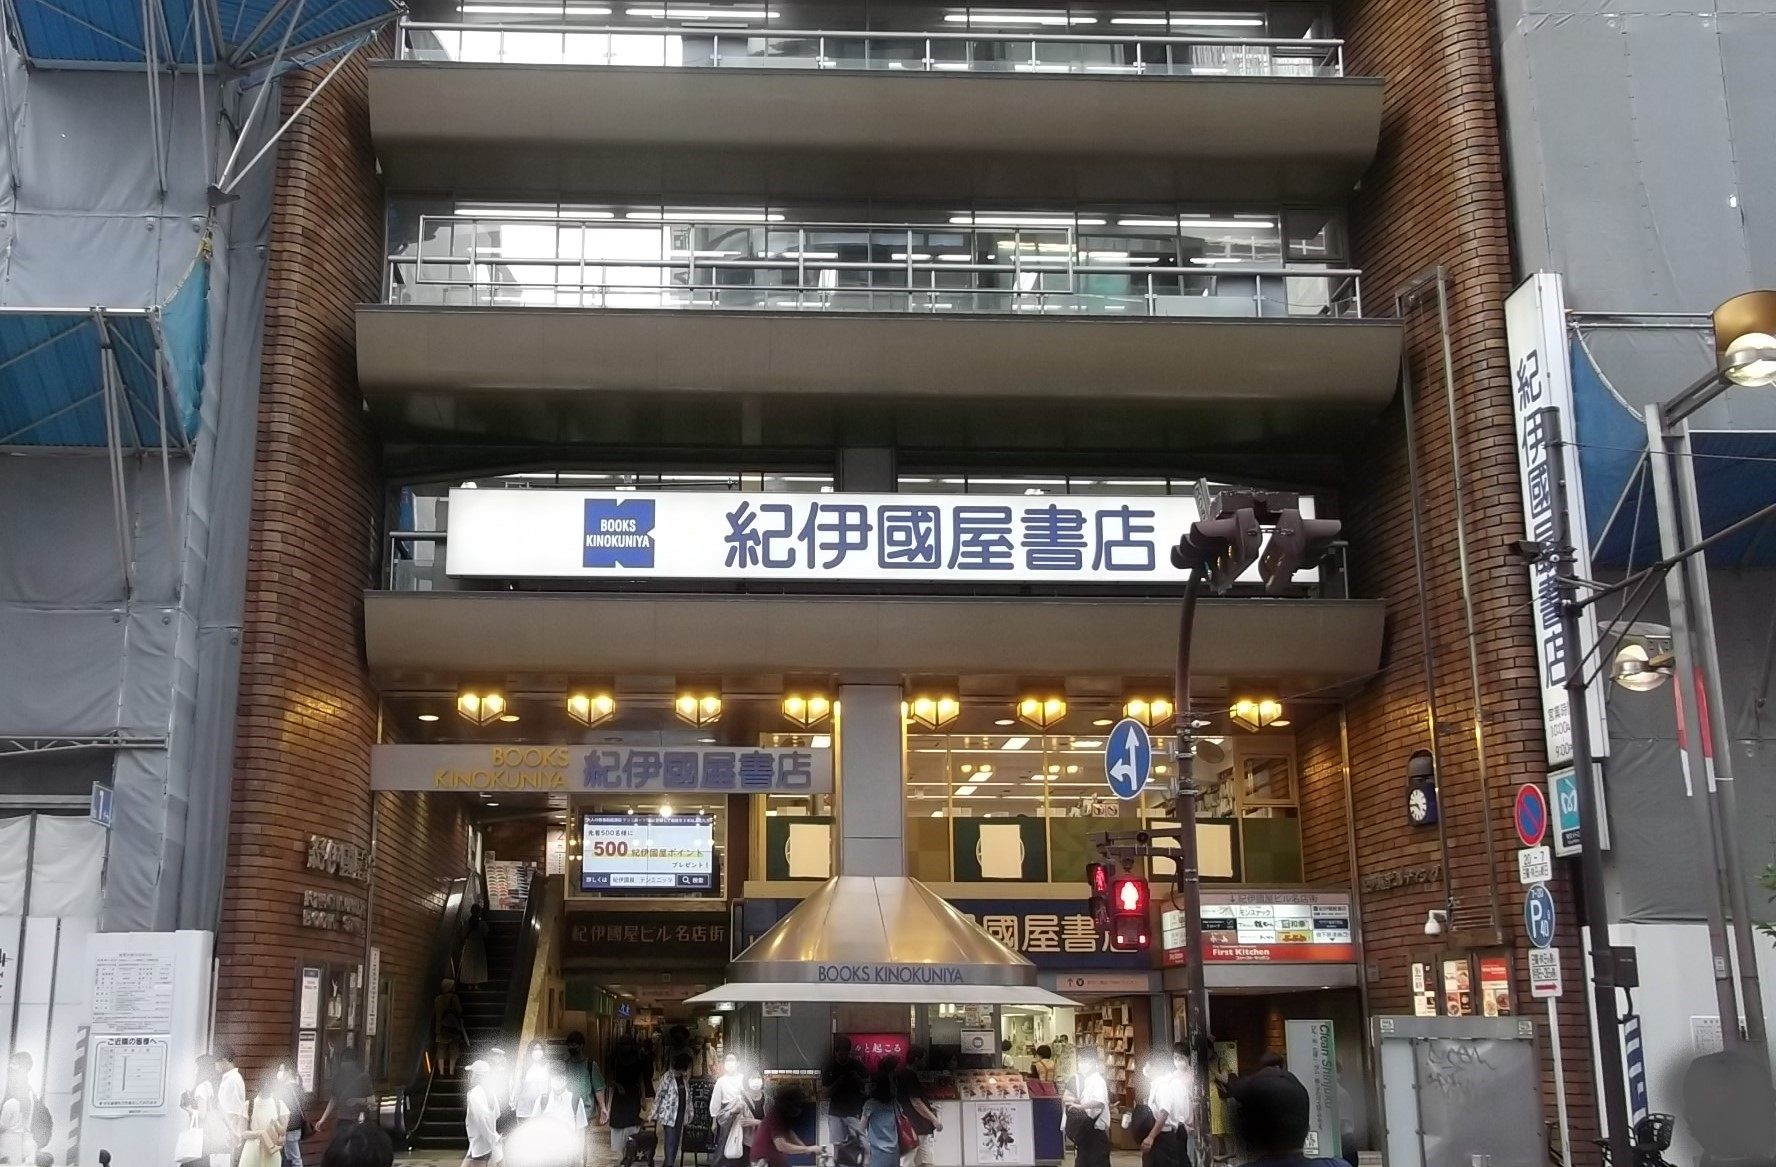 Kinokuniya Books Shinjuku Main Store Where To Shop Access Hours Price Good Luck Trip